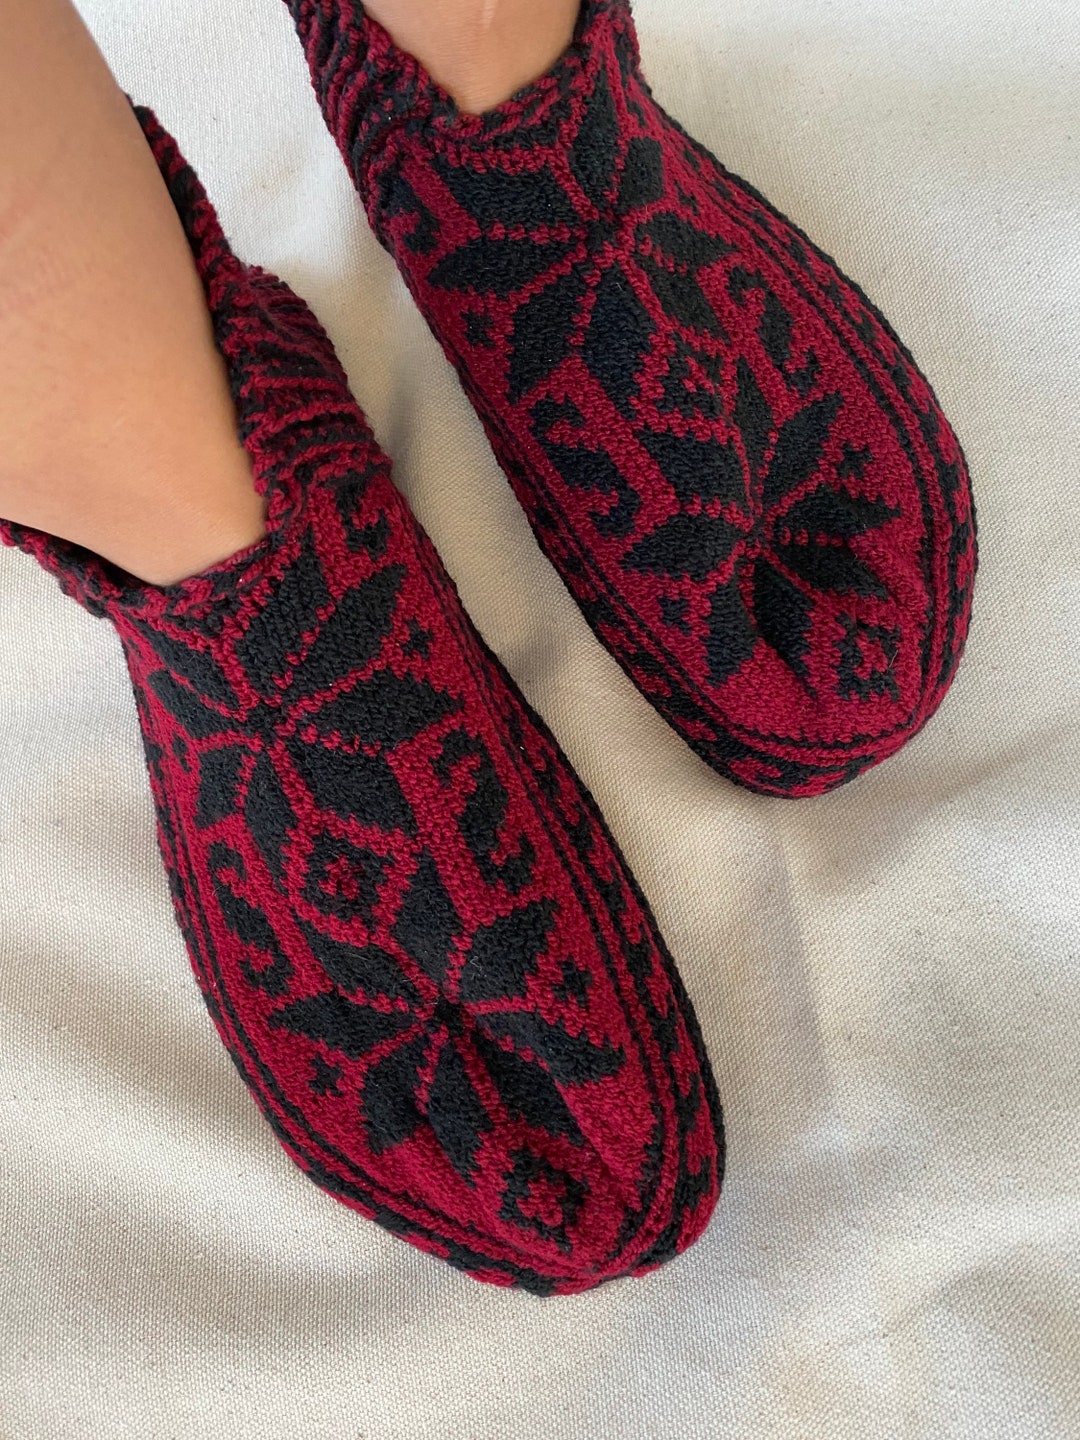 Wool Home Slippers Norwegian Selbu Pattern Handknit Womens House Shoes With  Heart Christmas Gift for Her Seamless Scandinavian Slipper Socks 